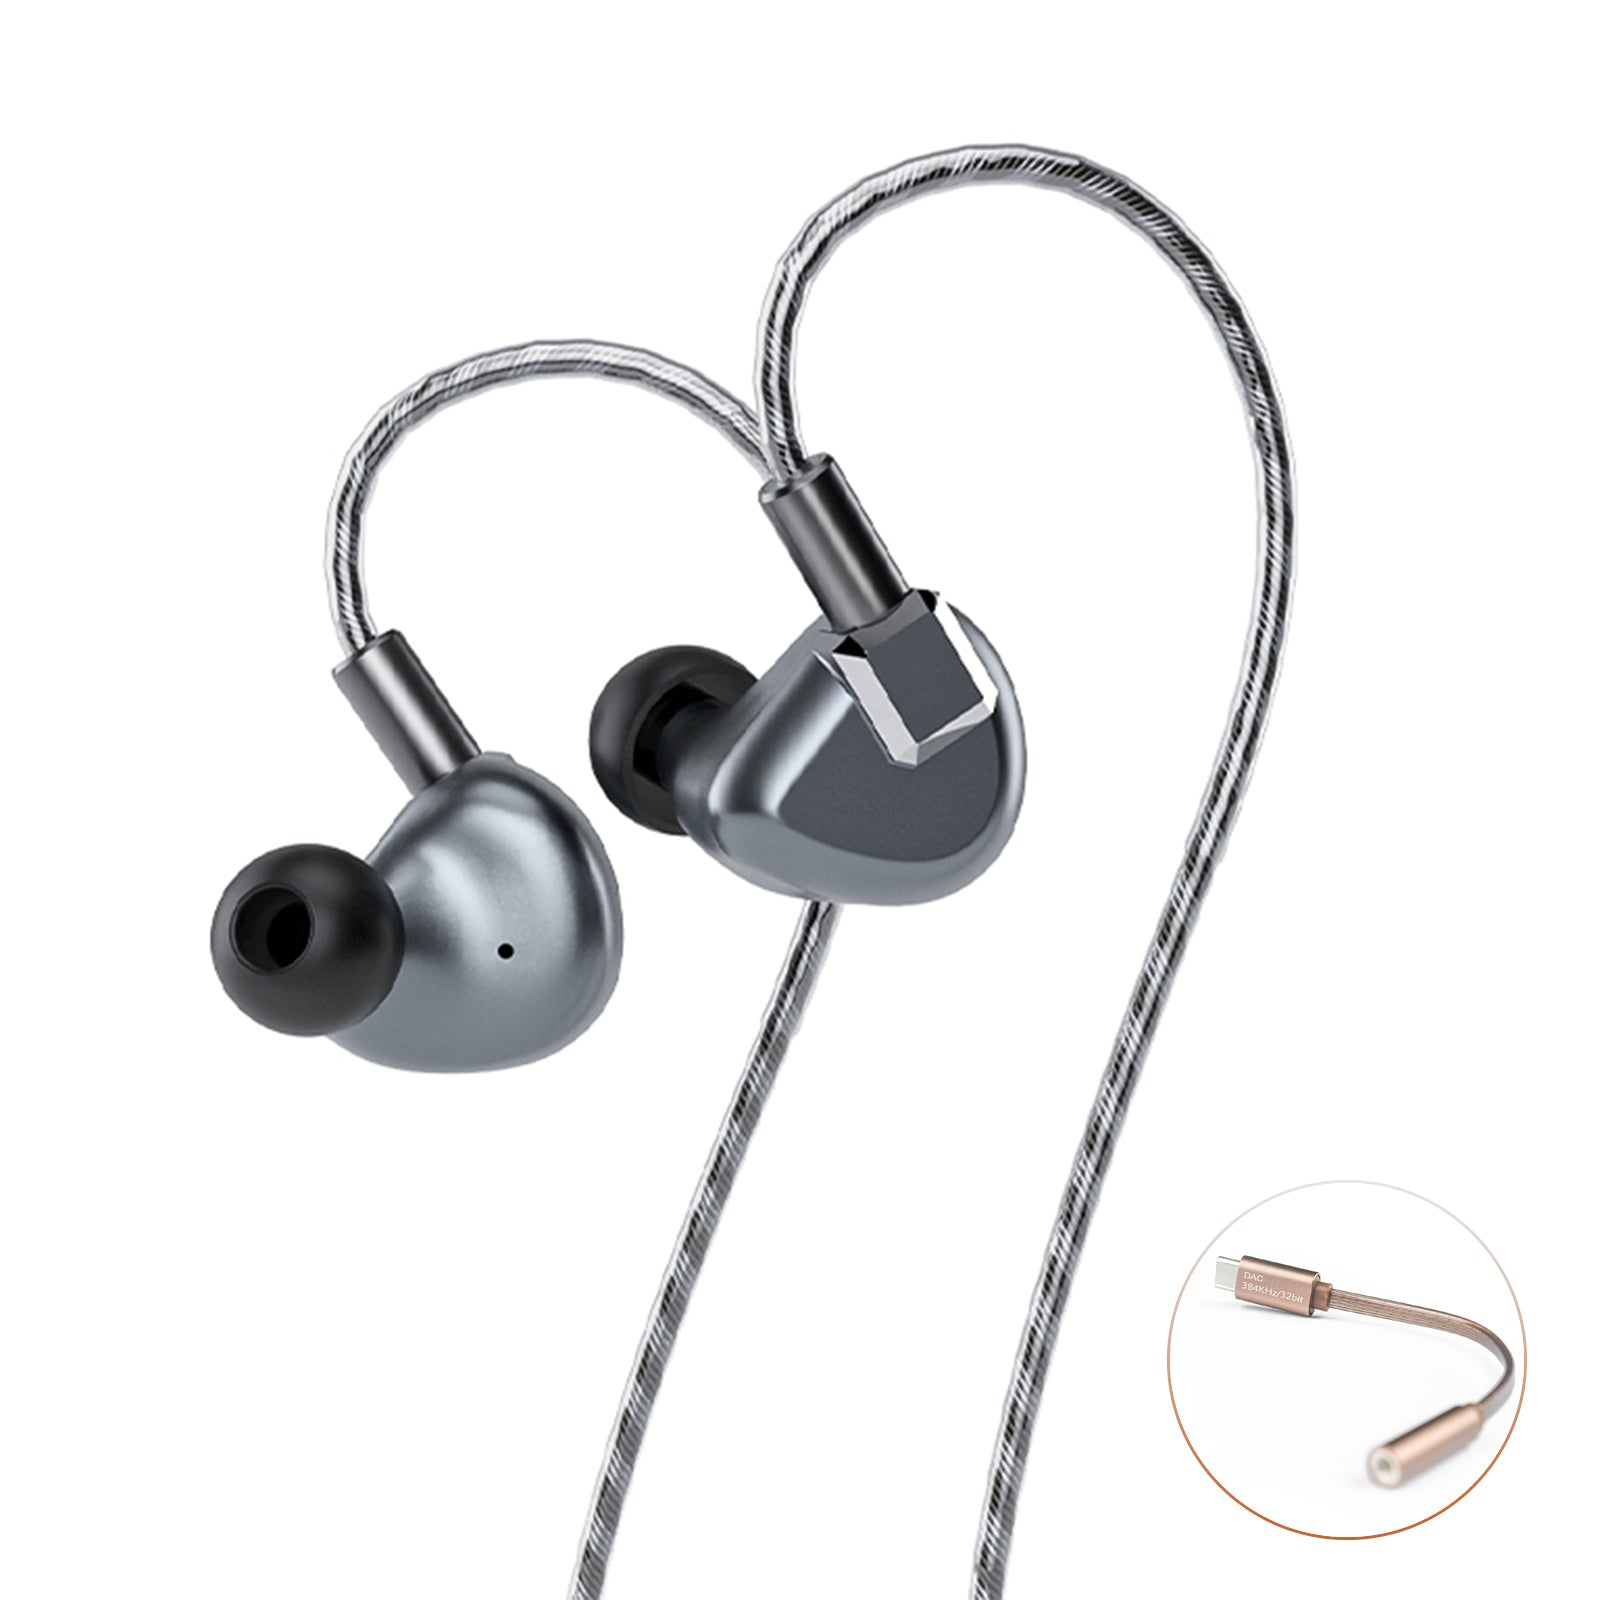 LETSHUOER S12 -  14.8mm planar IEMs and best Hi-Fi earphones for music lovers